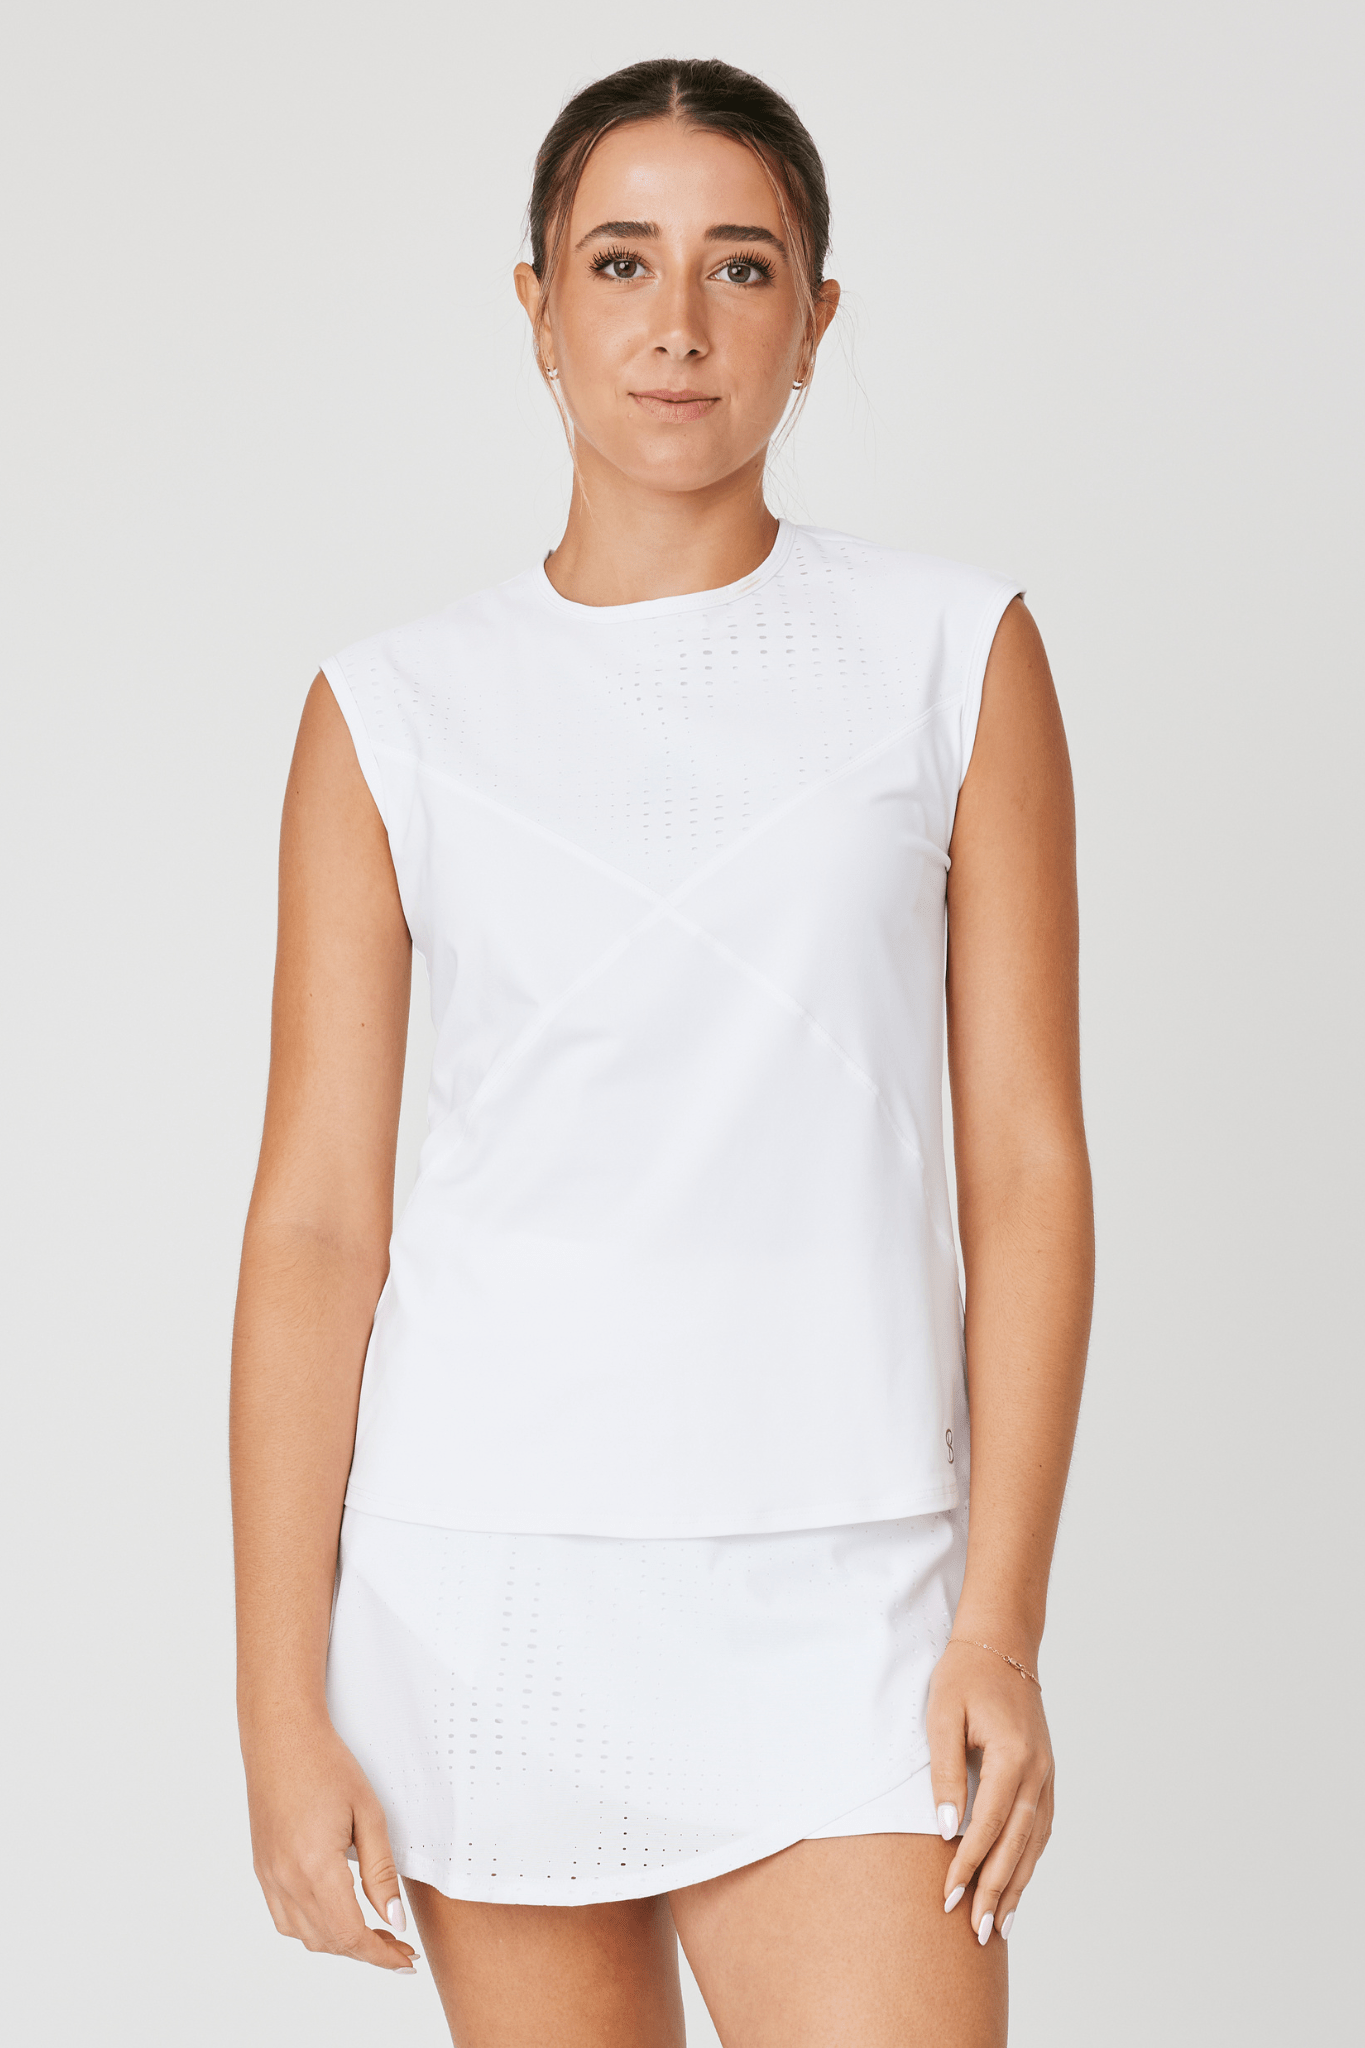 Women's Baseline White Tennis Cap Sleeve Top by Sofibella, close up